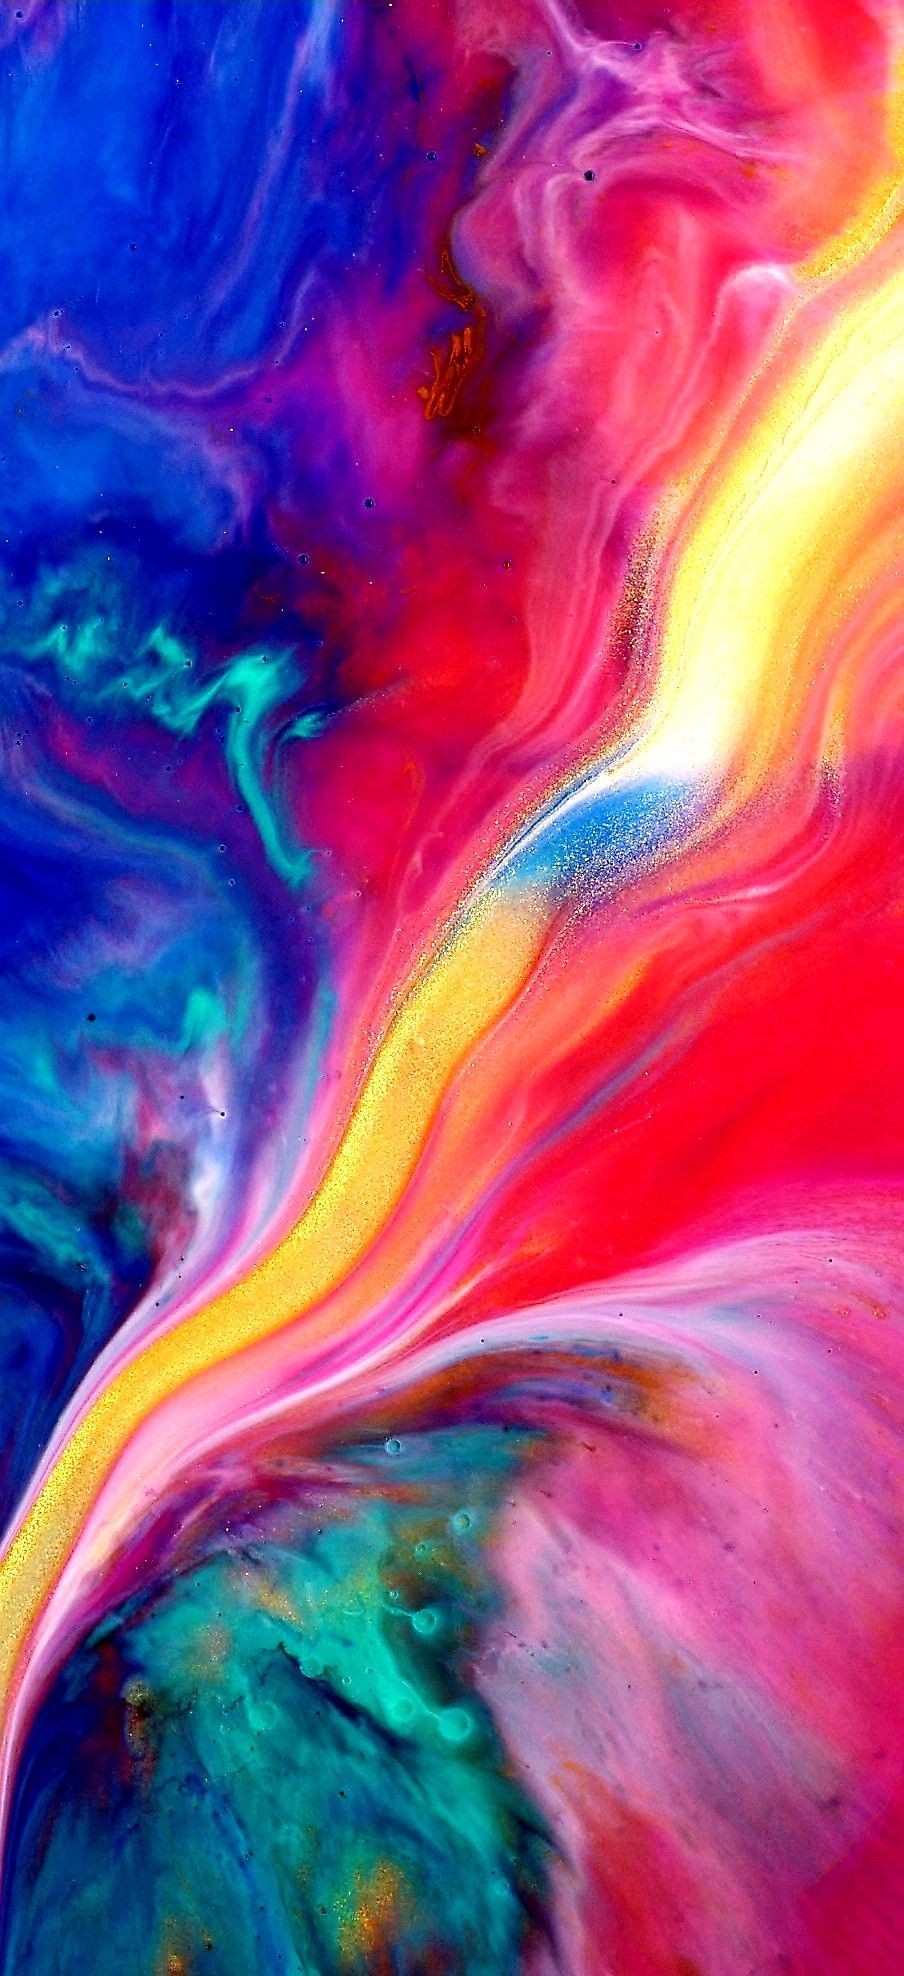 iphone x wallpaper. Abstract wallpaper, Rainbow wallpaper, Colorful wallpaper